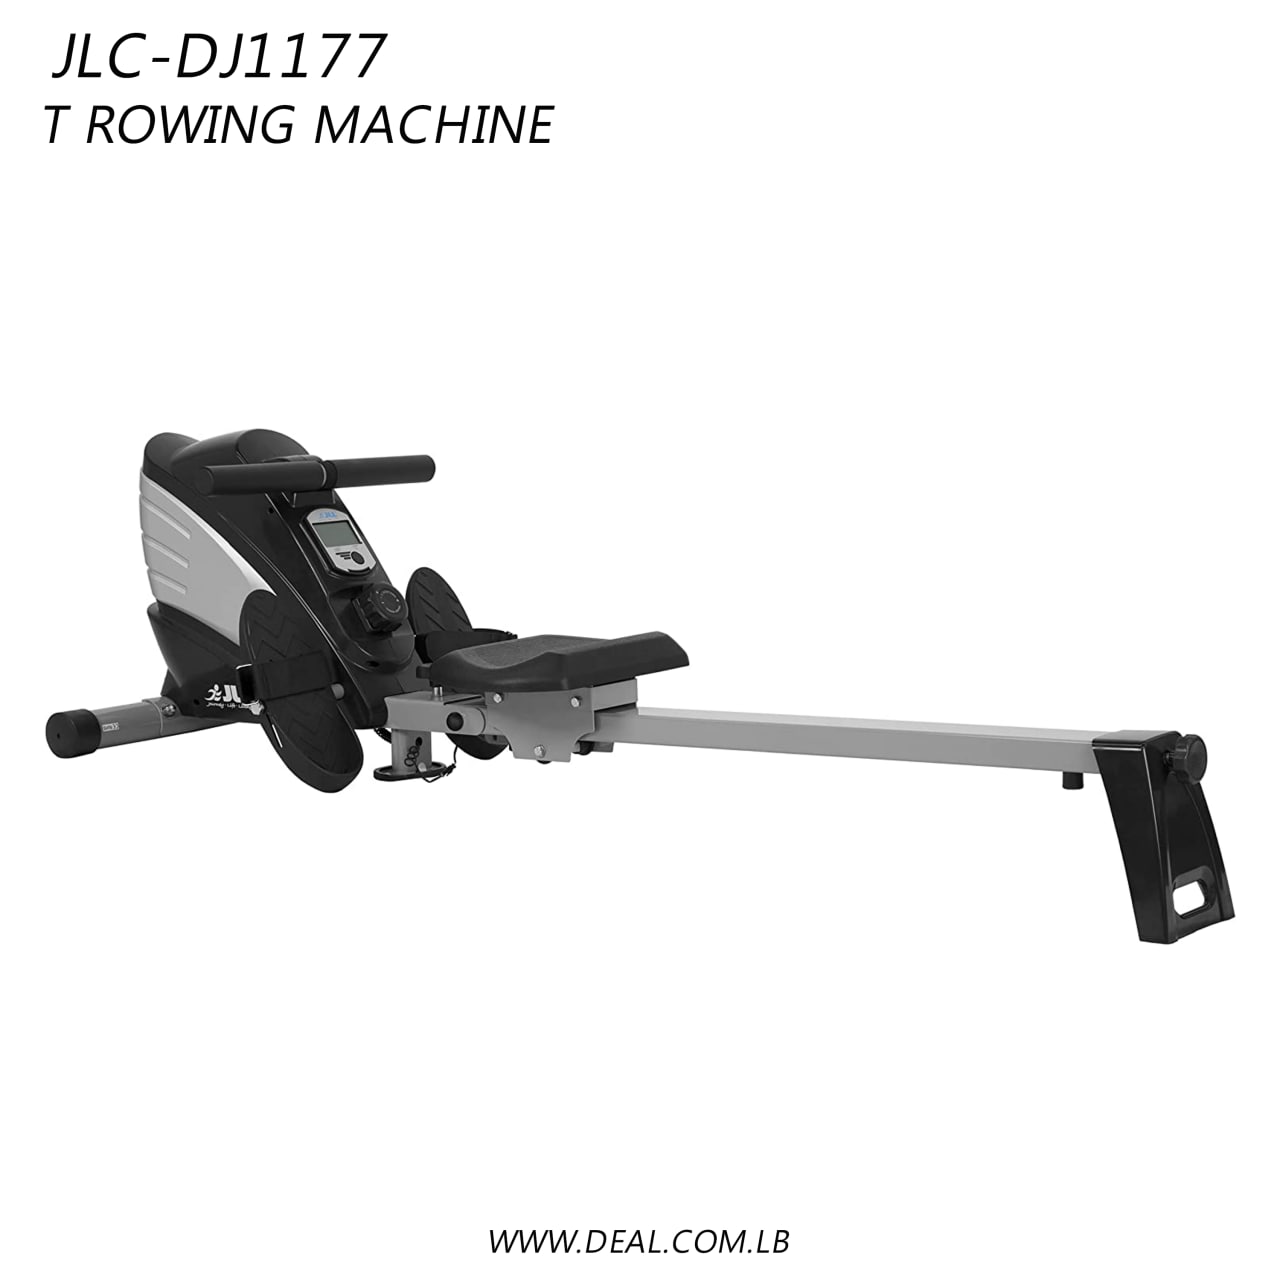 JLC-DJ1177 | T Rowing Machine